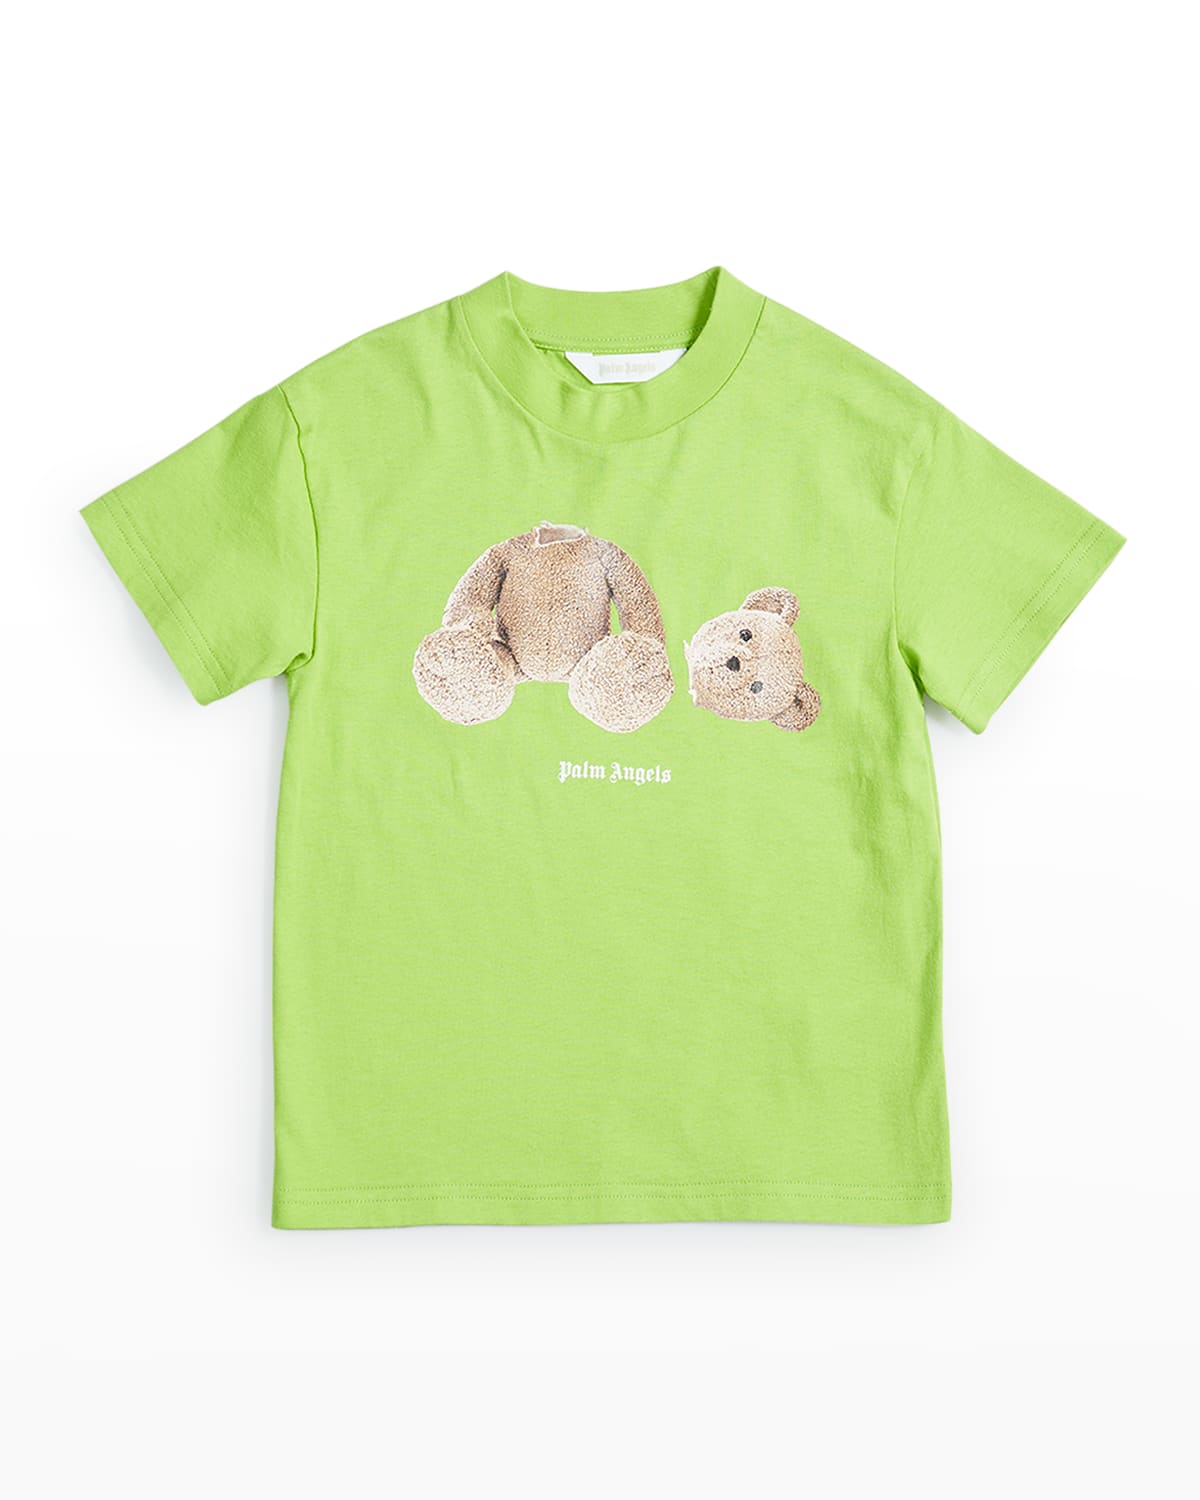 Boy's Bear Graphic T-Shirt, Size 4-10